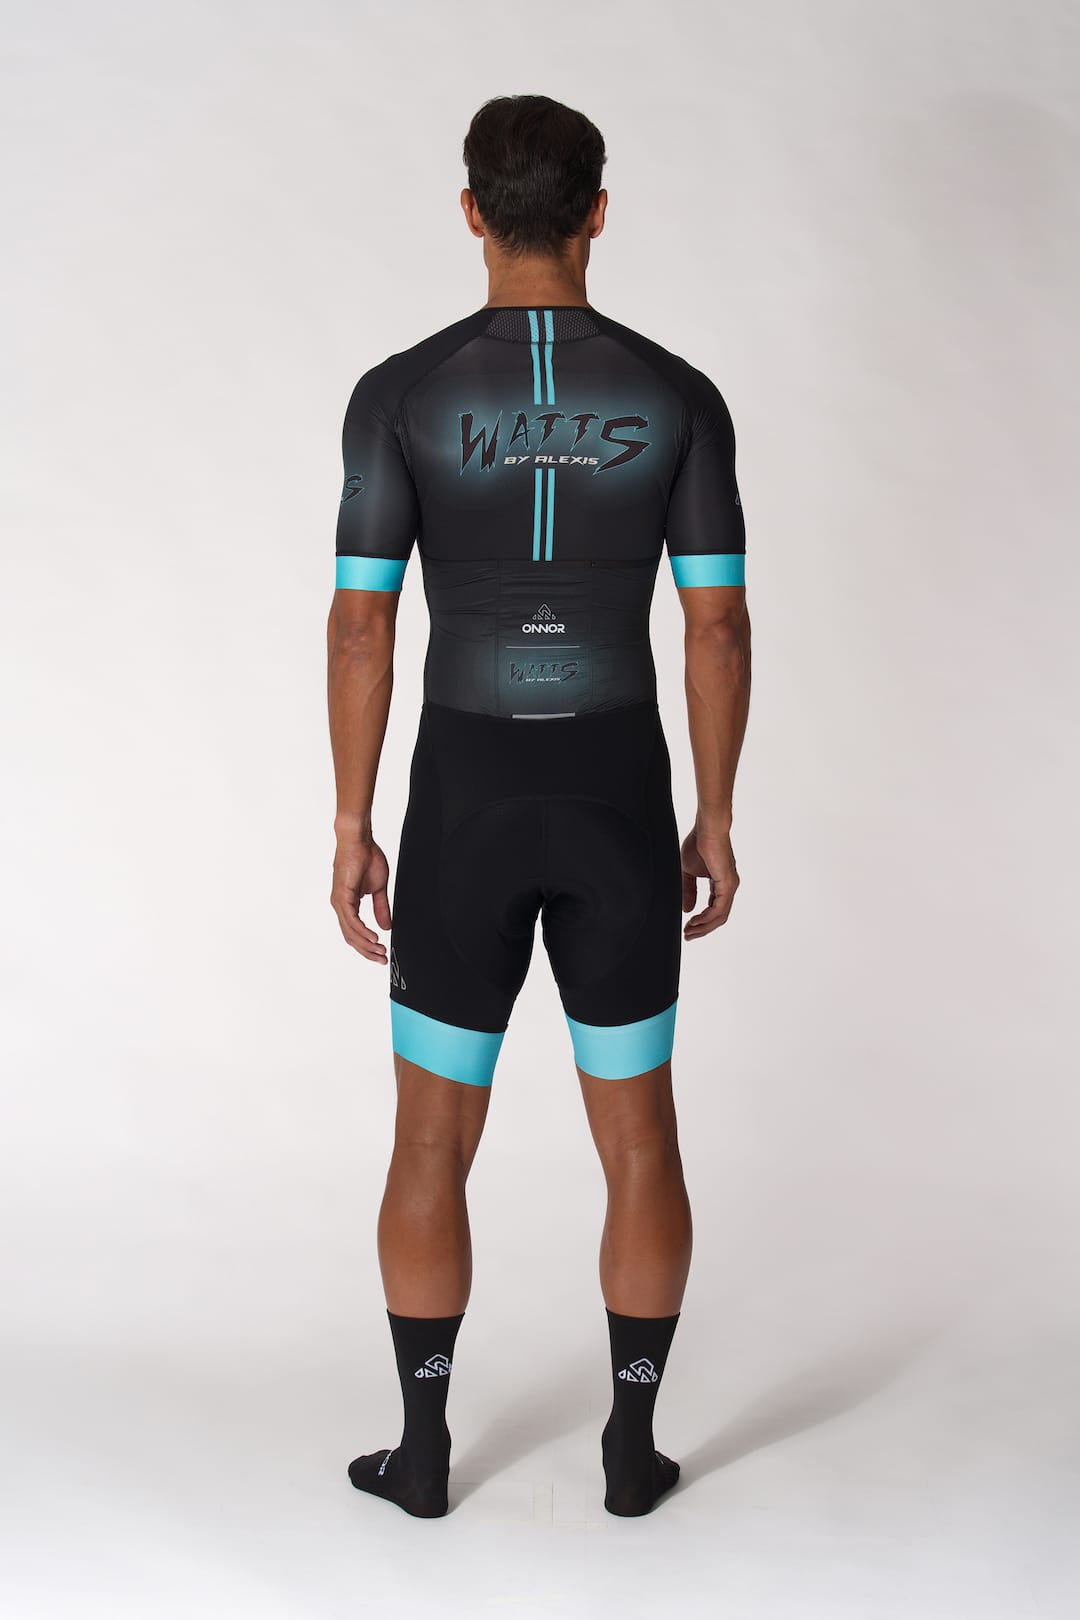 shop customized cycling aerosuit no minimum order, custom cyclist aerosuit, custom cycling jersey for sale